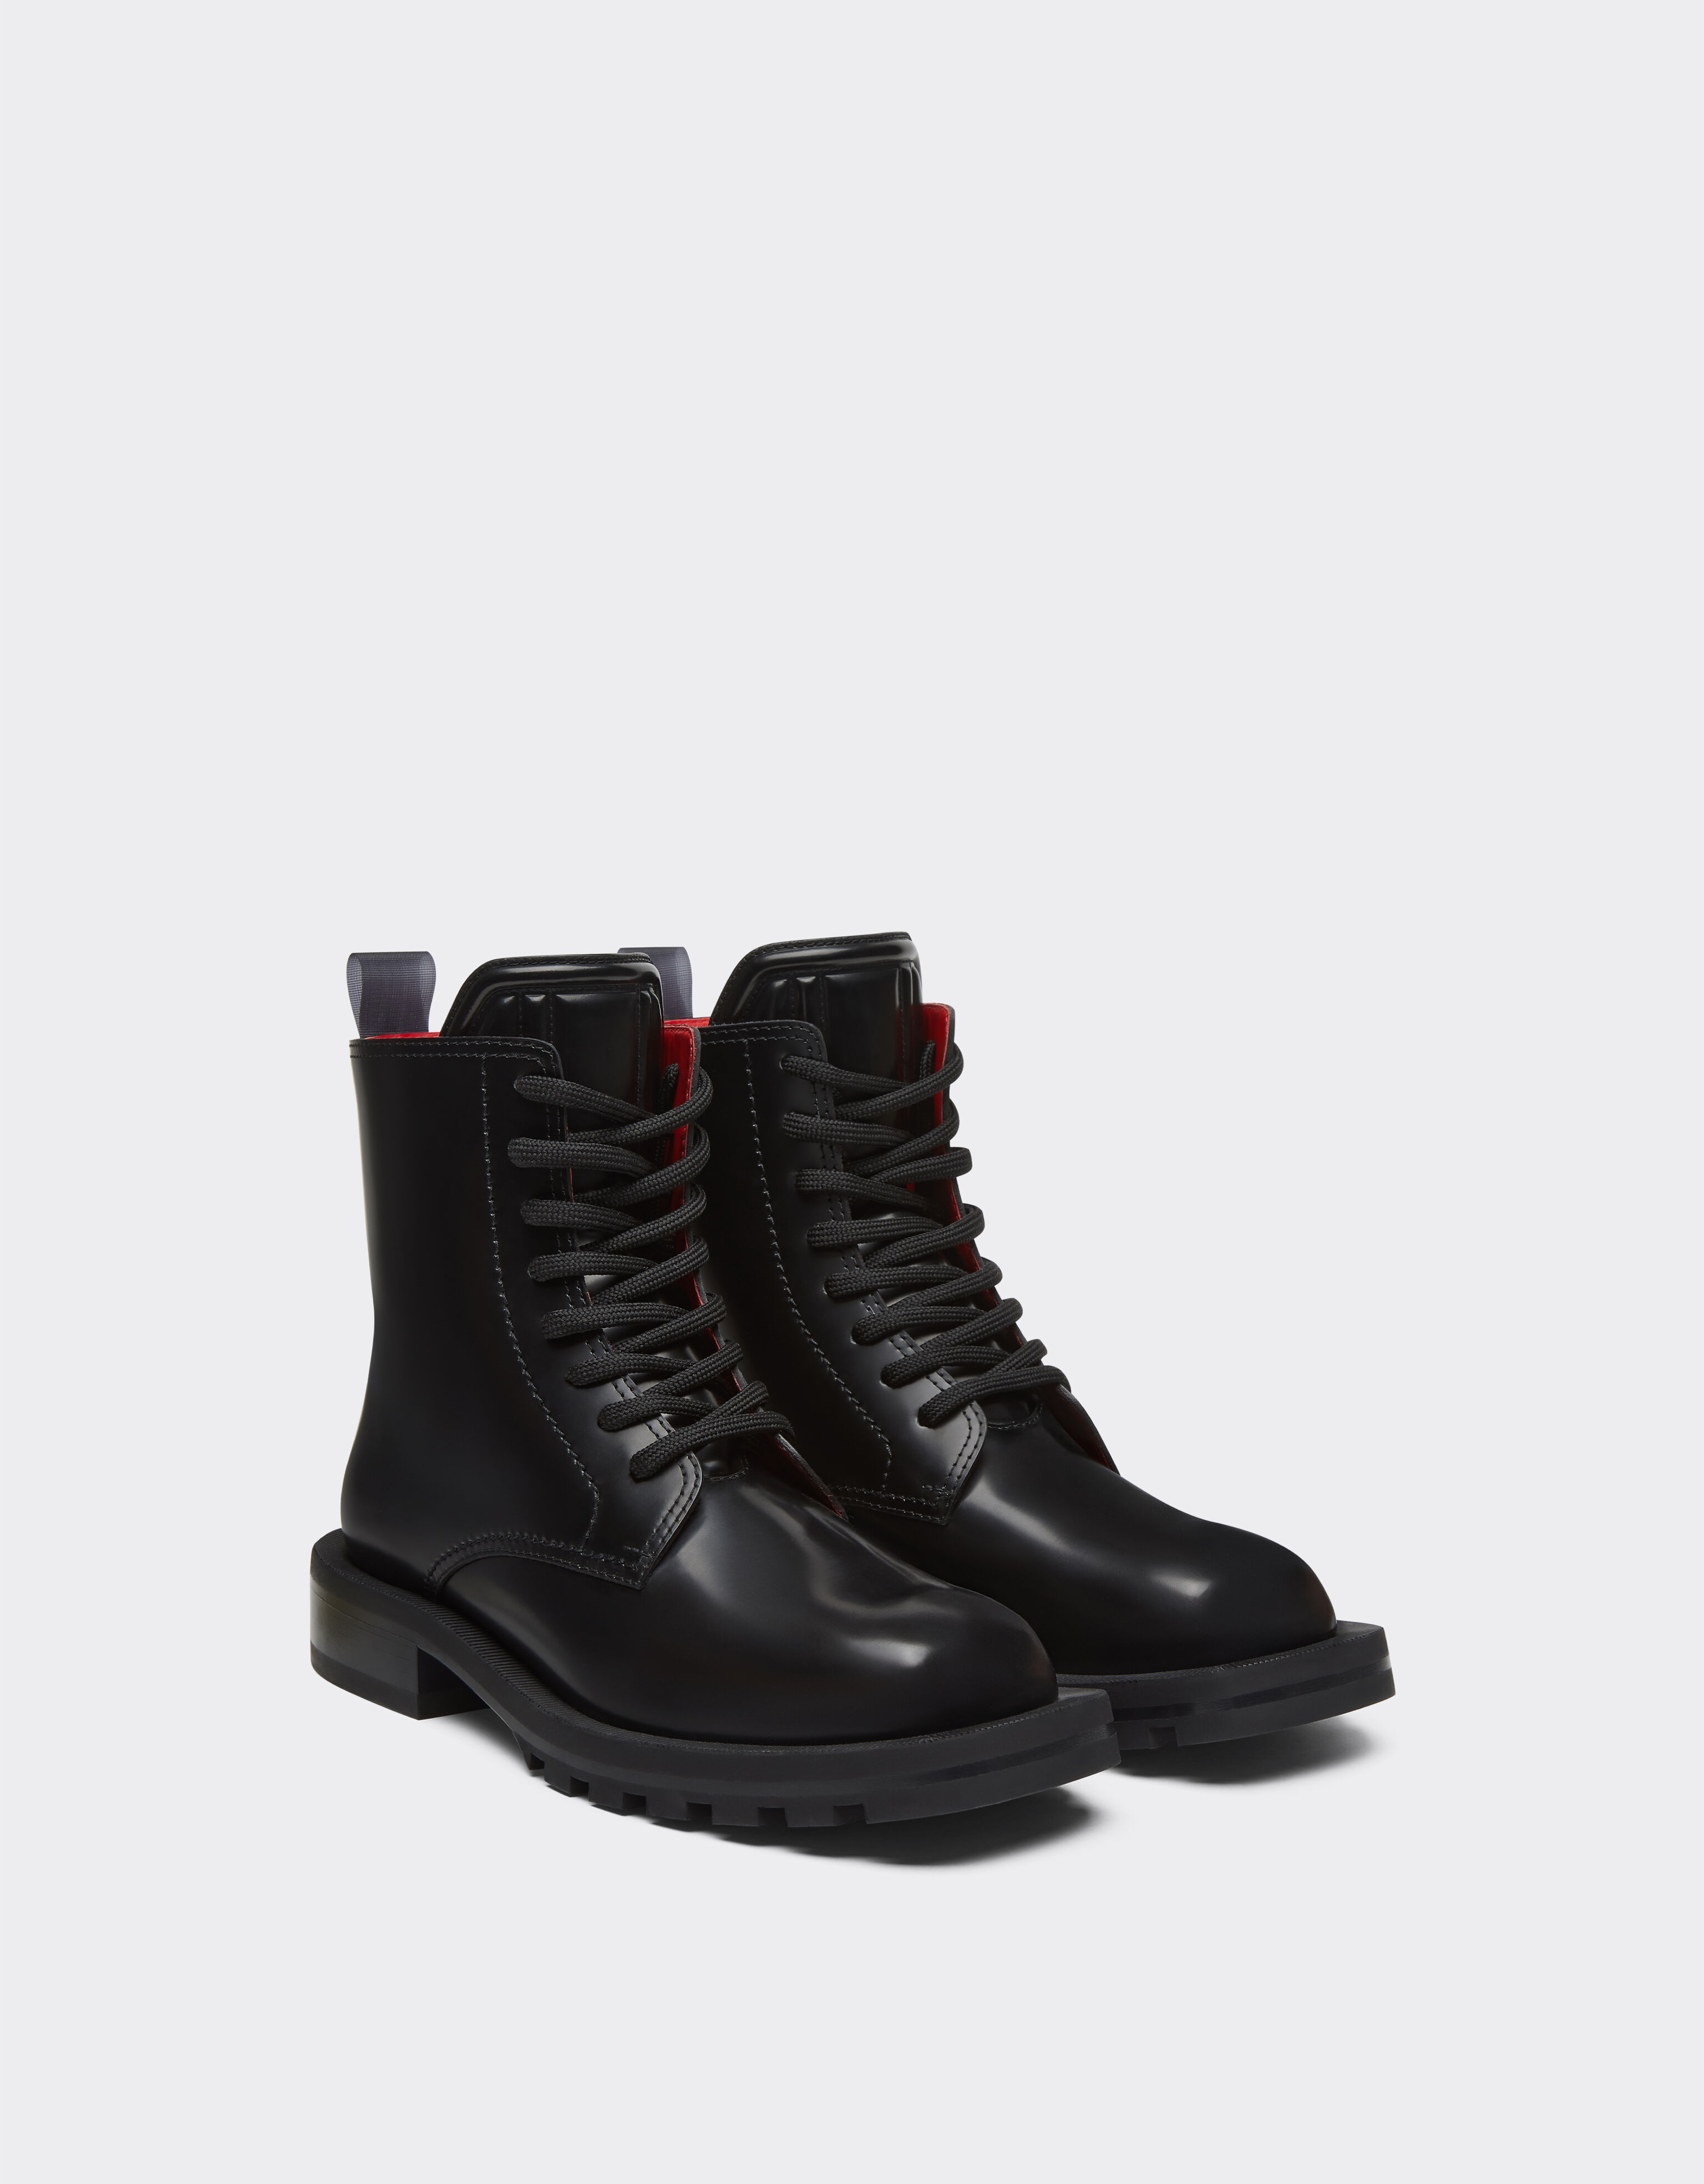 Ferrari Brushed leather ankle boot Black 21455f